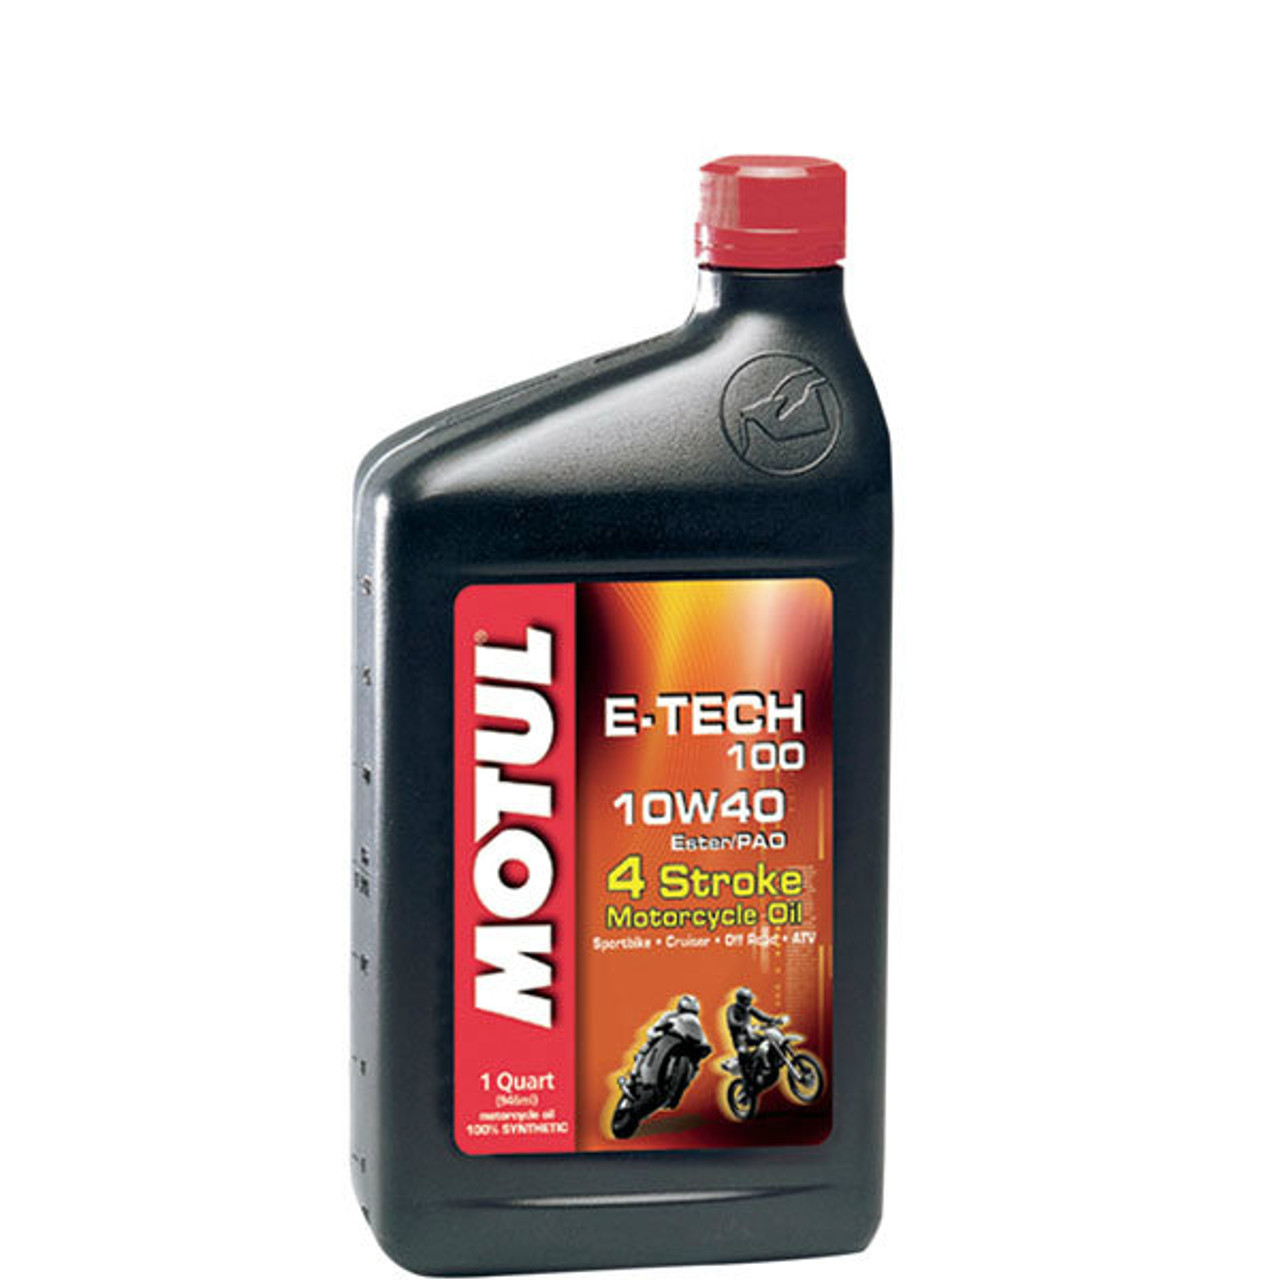 Motul E-Tech 100 10W40 Synthetic Ester Motor Oil 1 Quart